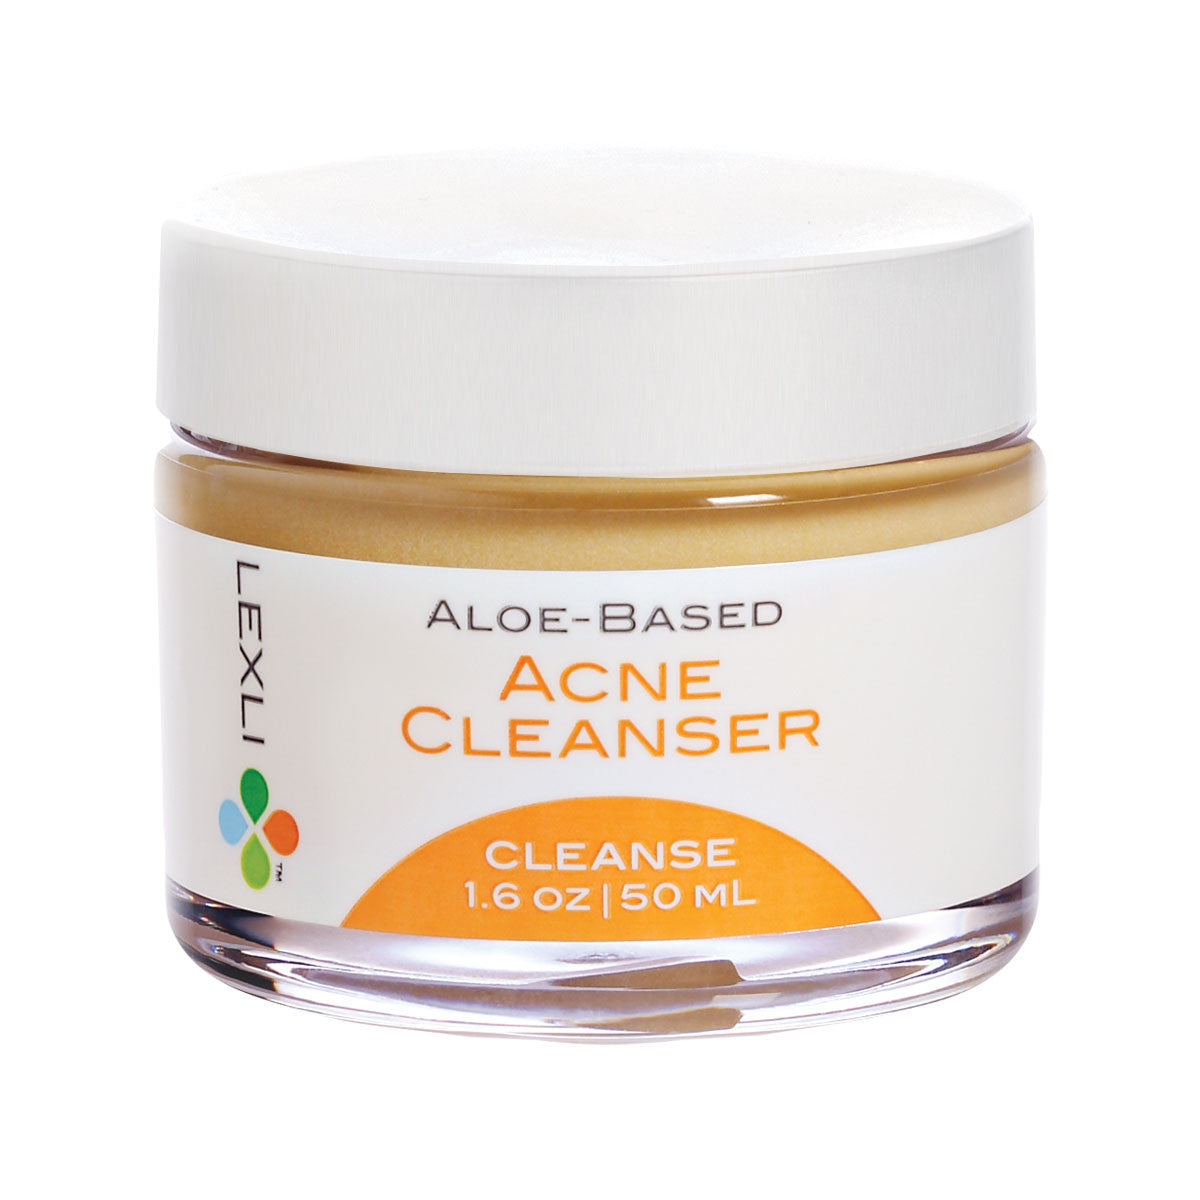 Lexli Acne Cleanser 1.6 oz jar